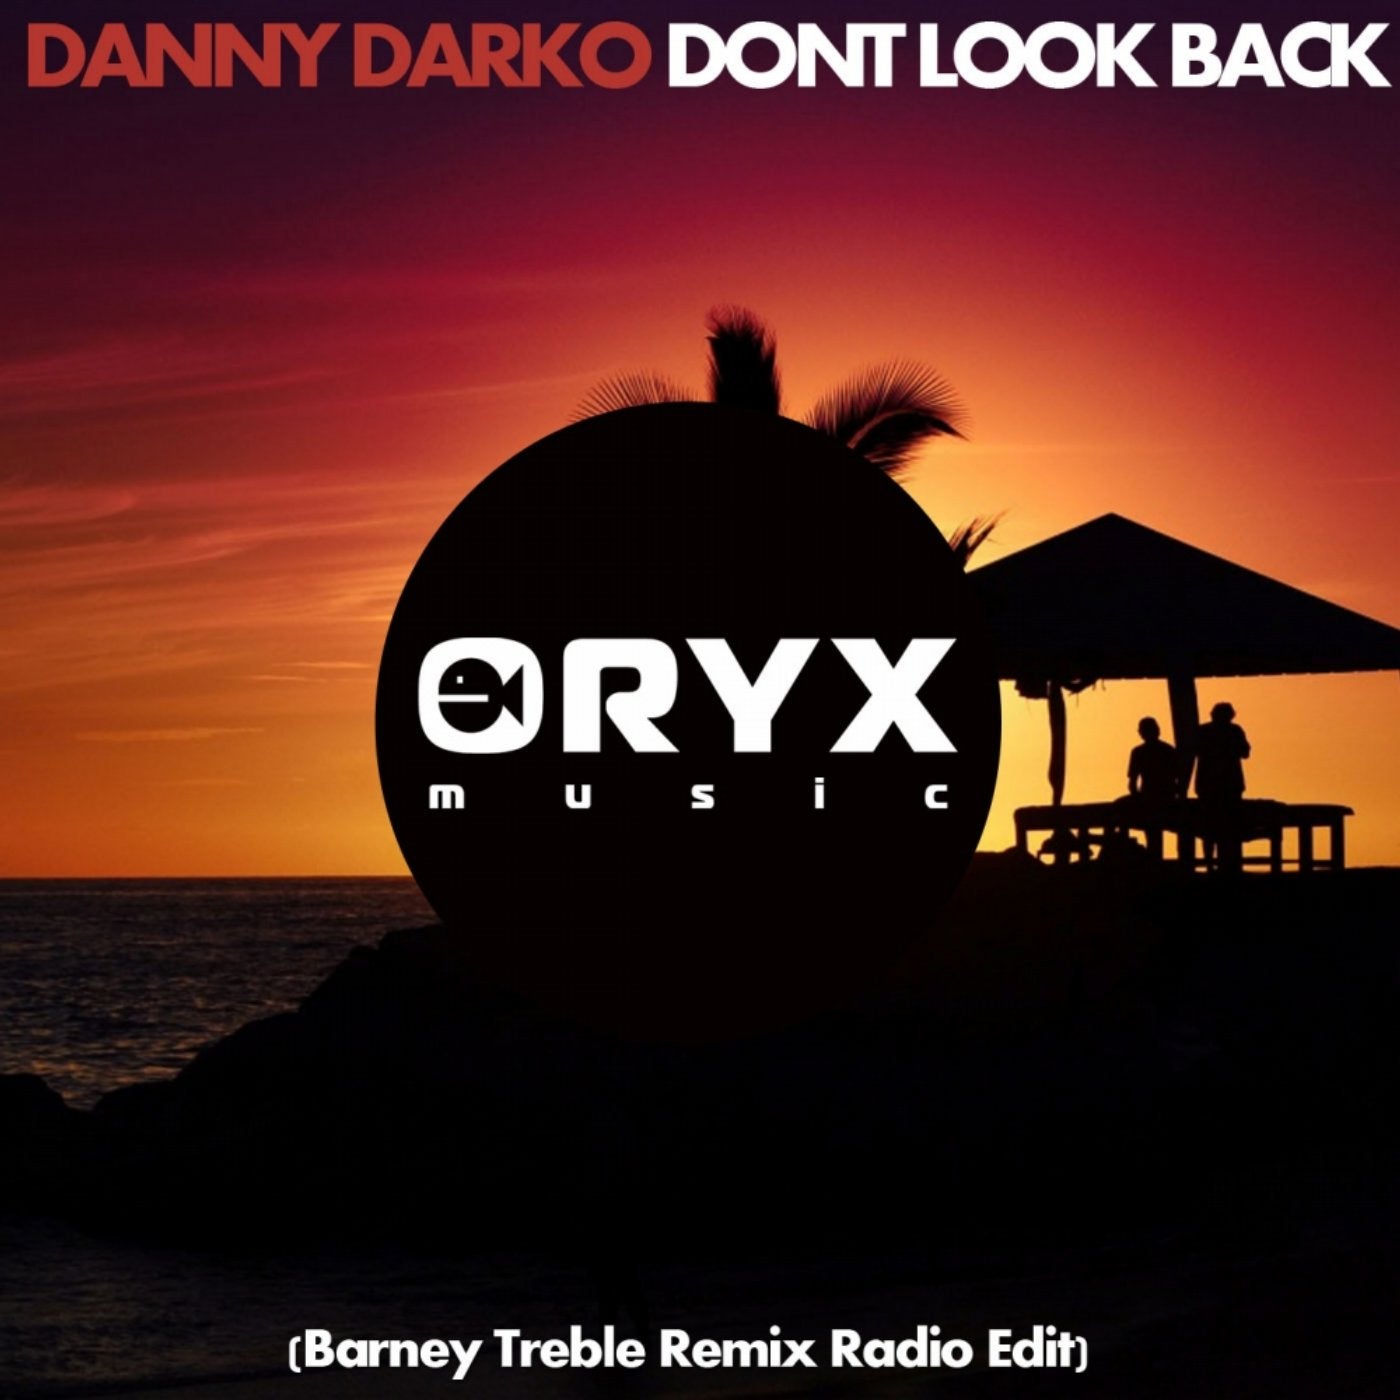 Don't Look Back (Barney Treble Remix Radio Edit)